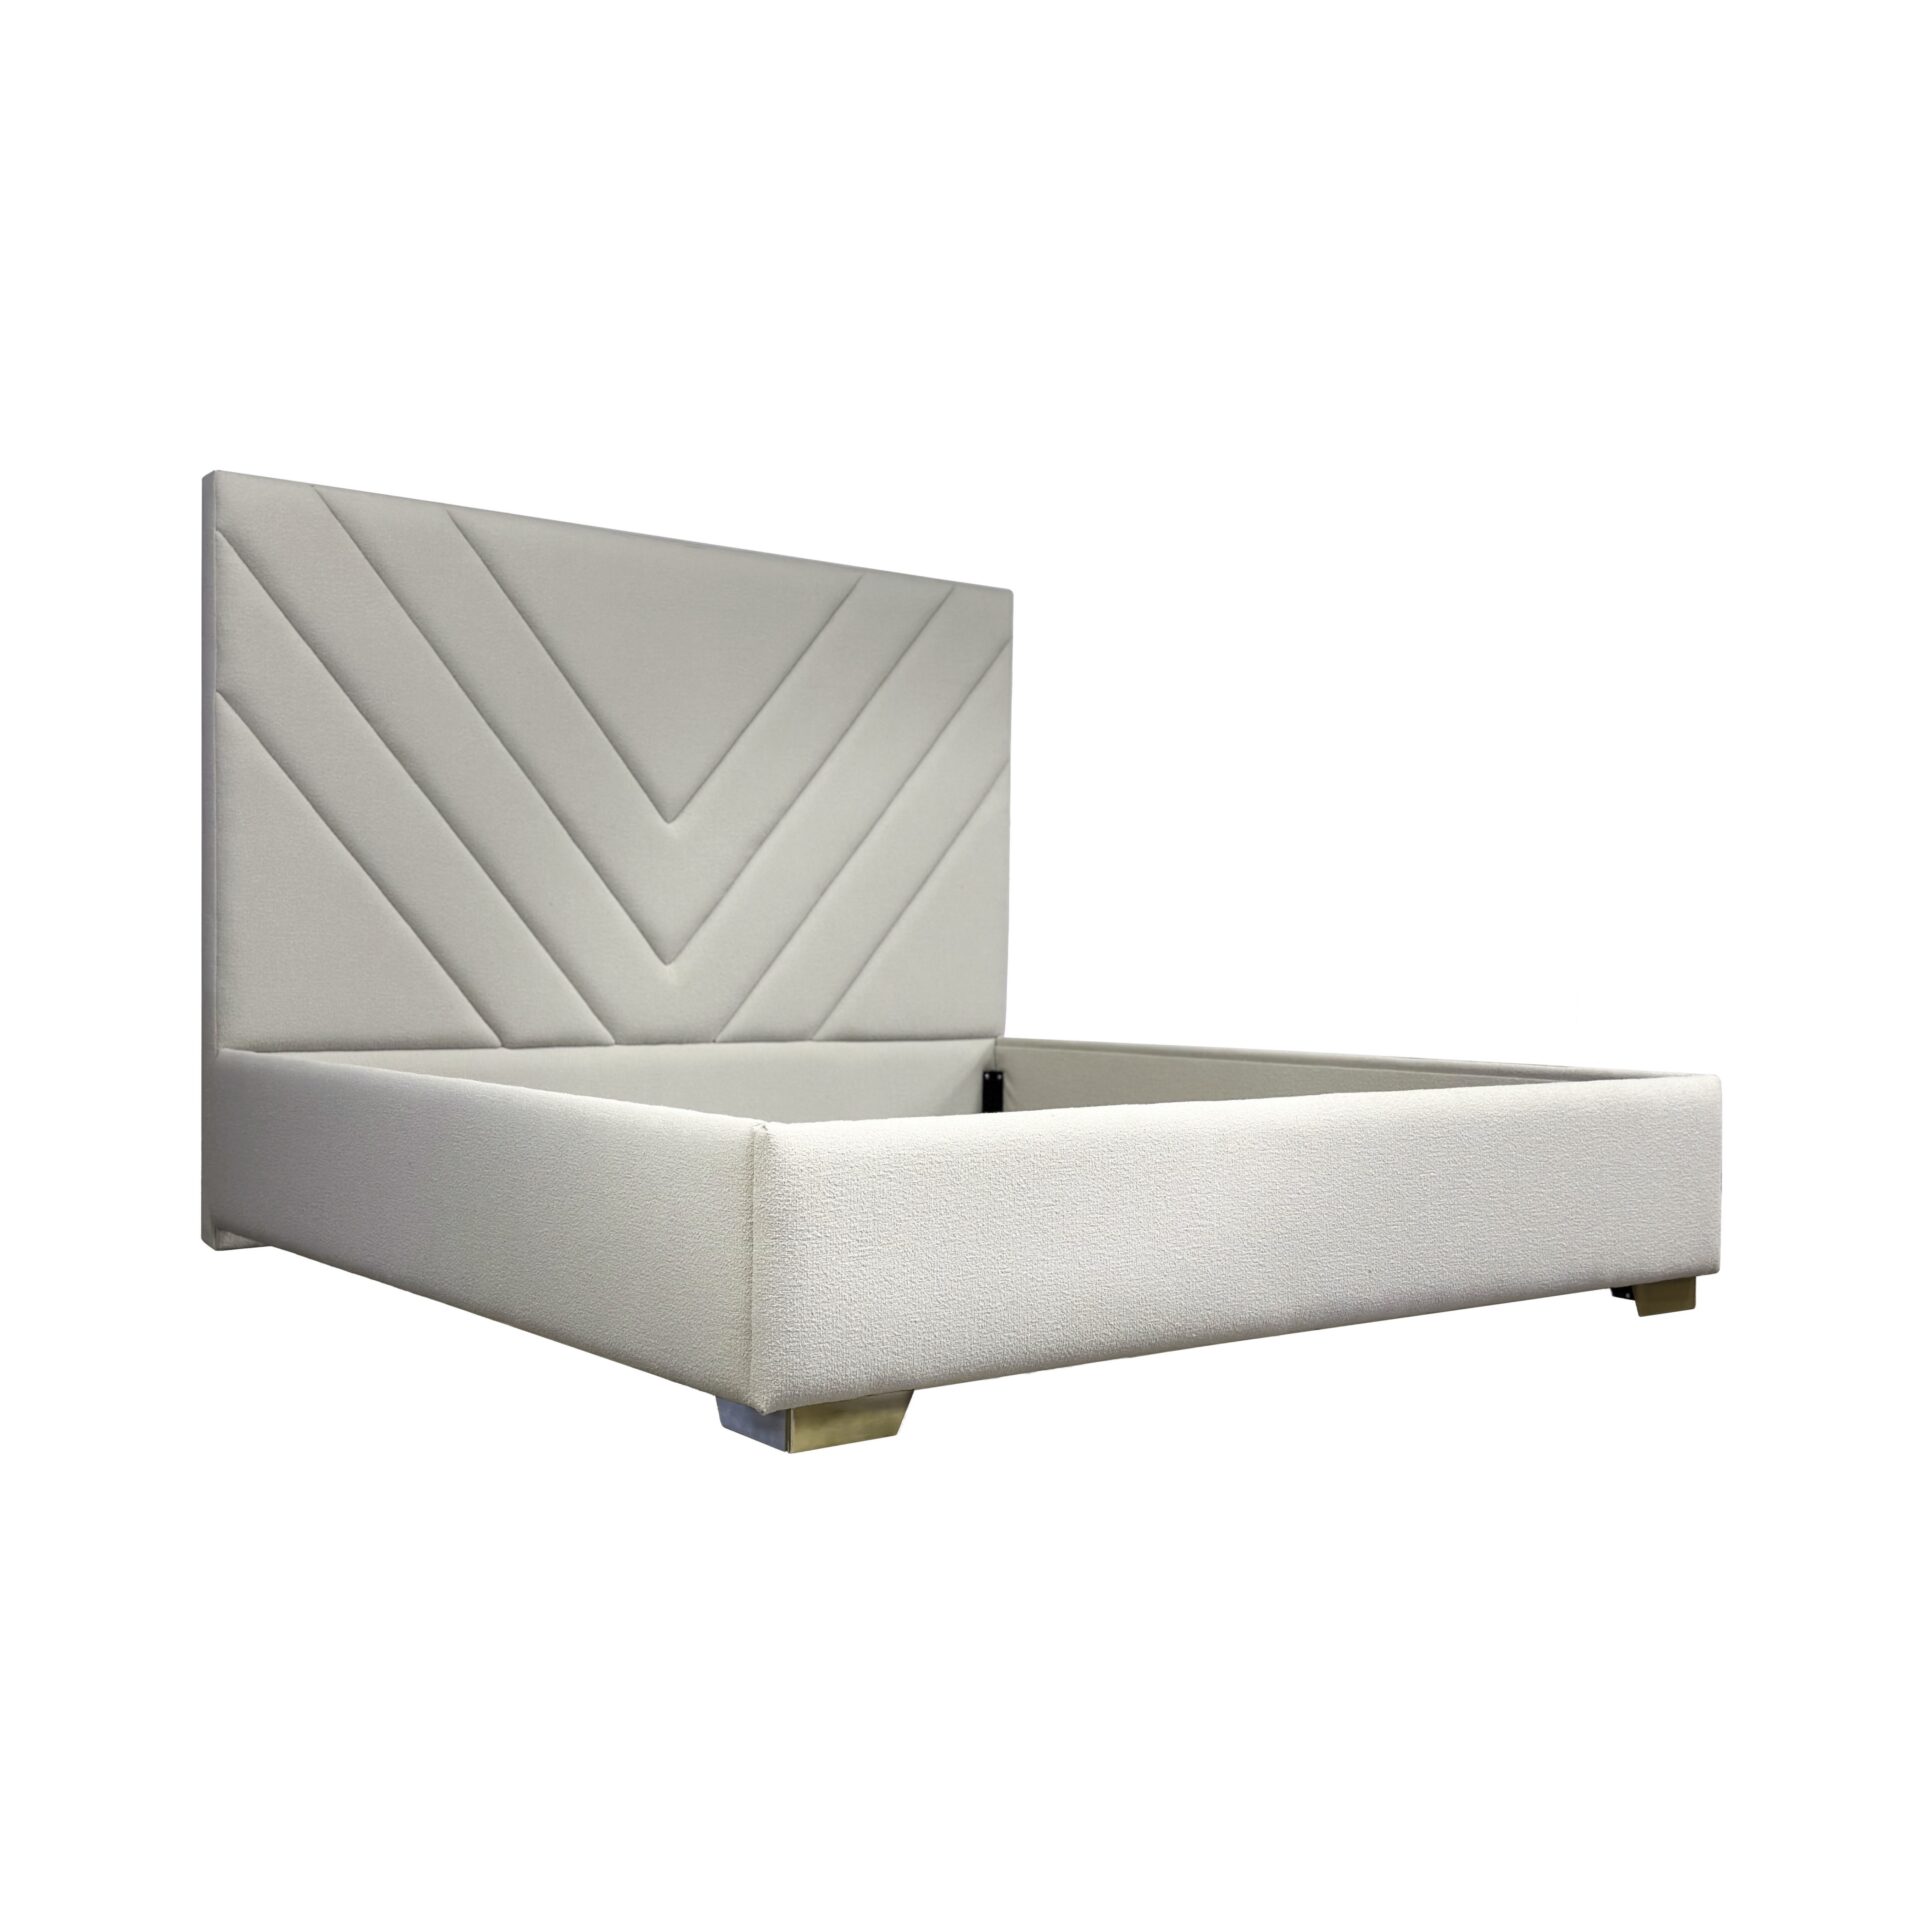 GATSBY Freestanding Upholstered Bed - Blend Home Furnishings